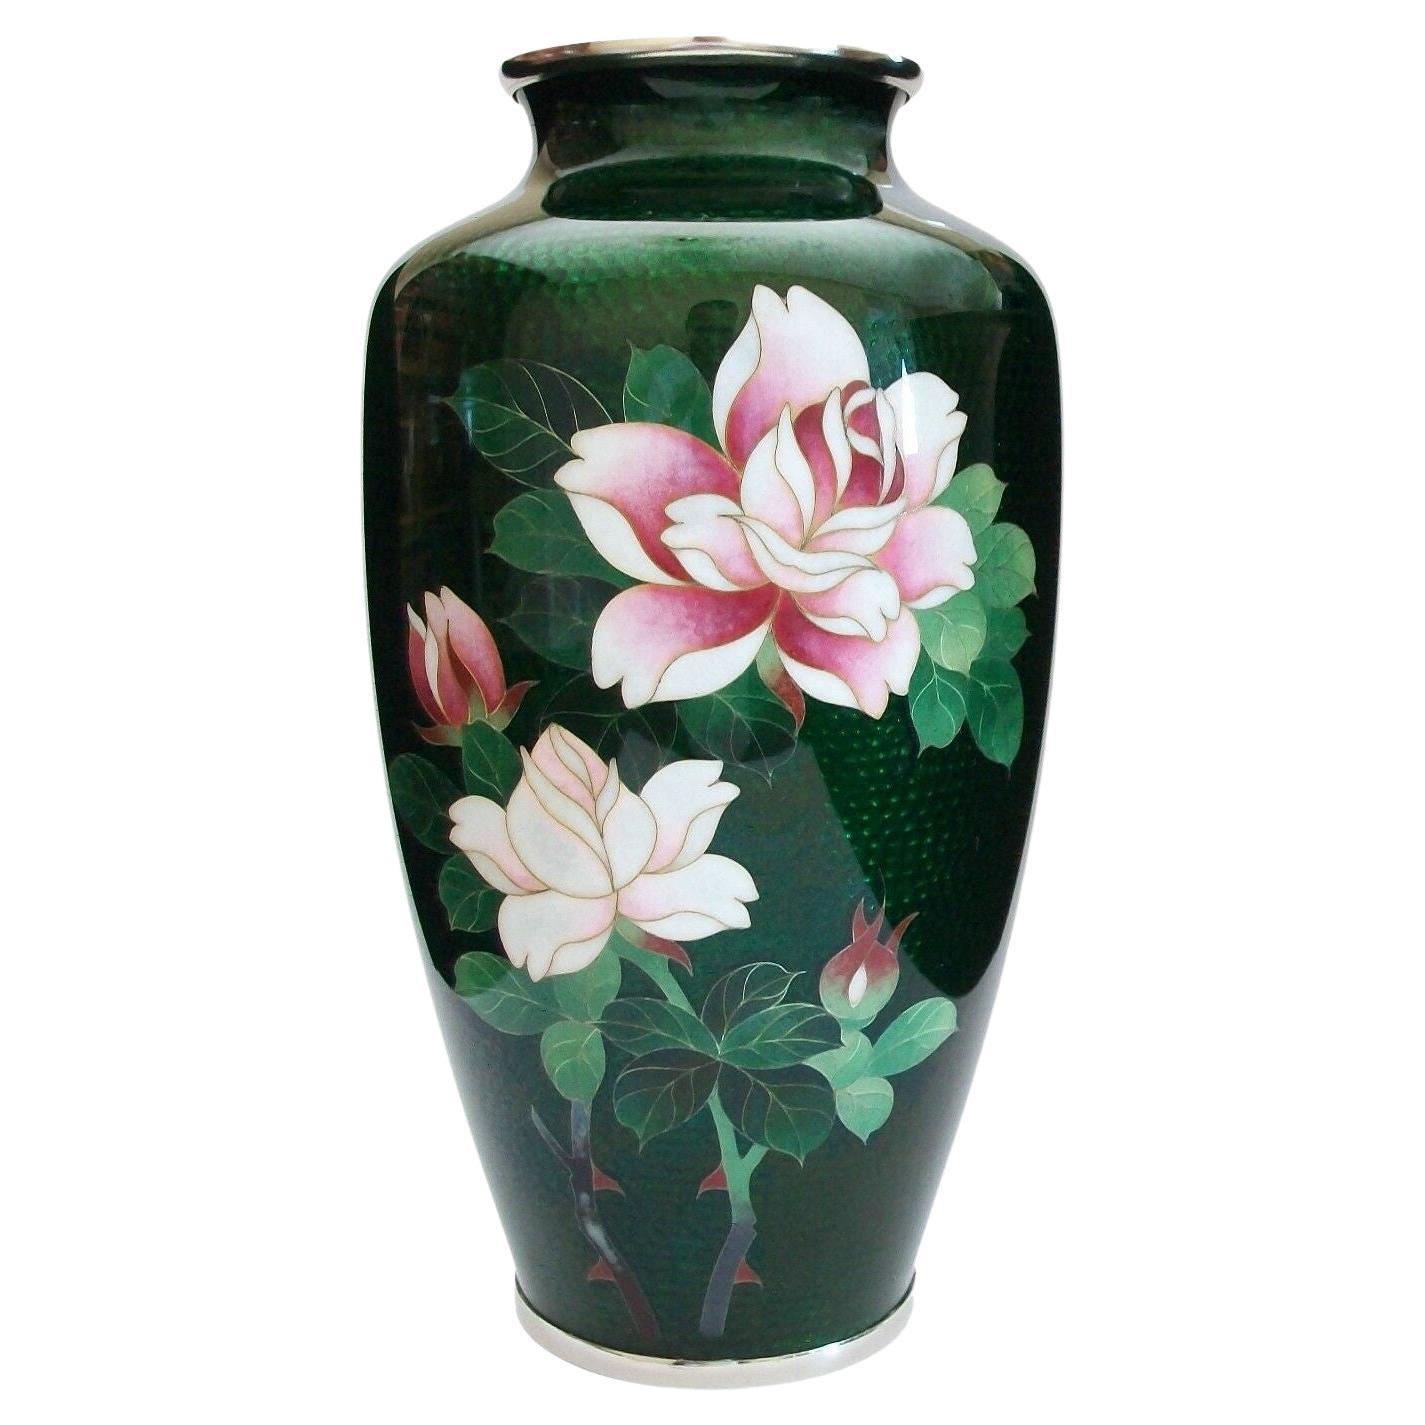 Sendo Company, Feine Cloisonné-Vase mit Rosen, signiert, Japan, 20. Jahrhundert